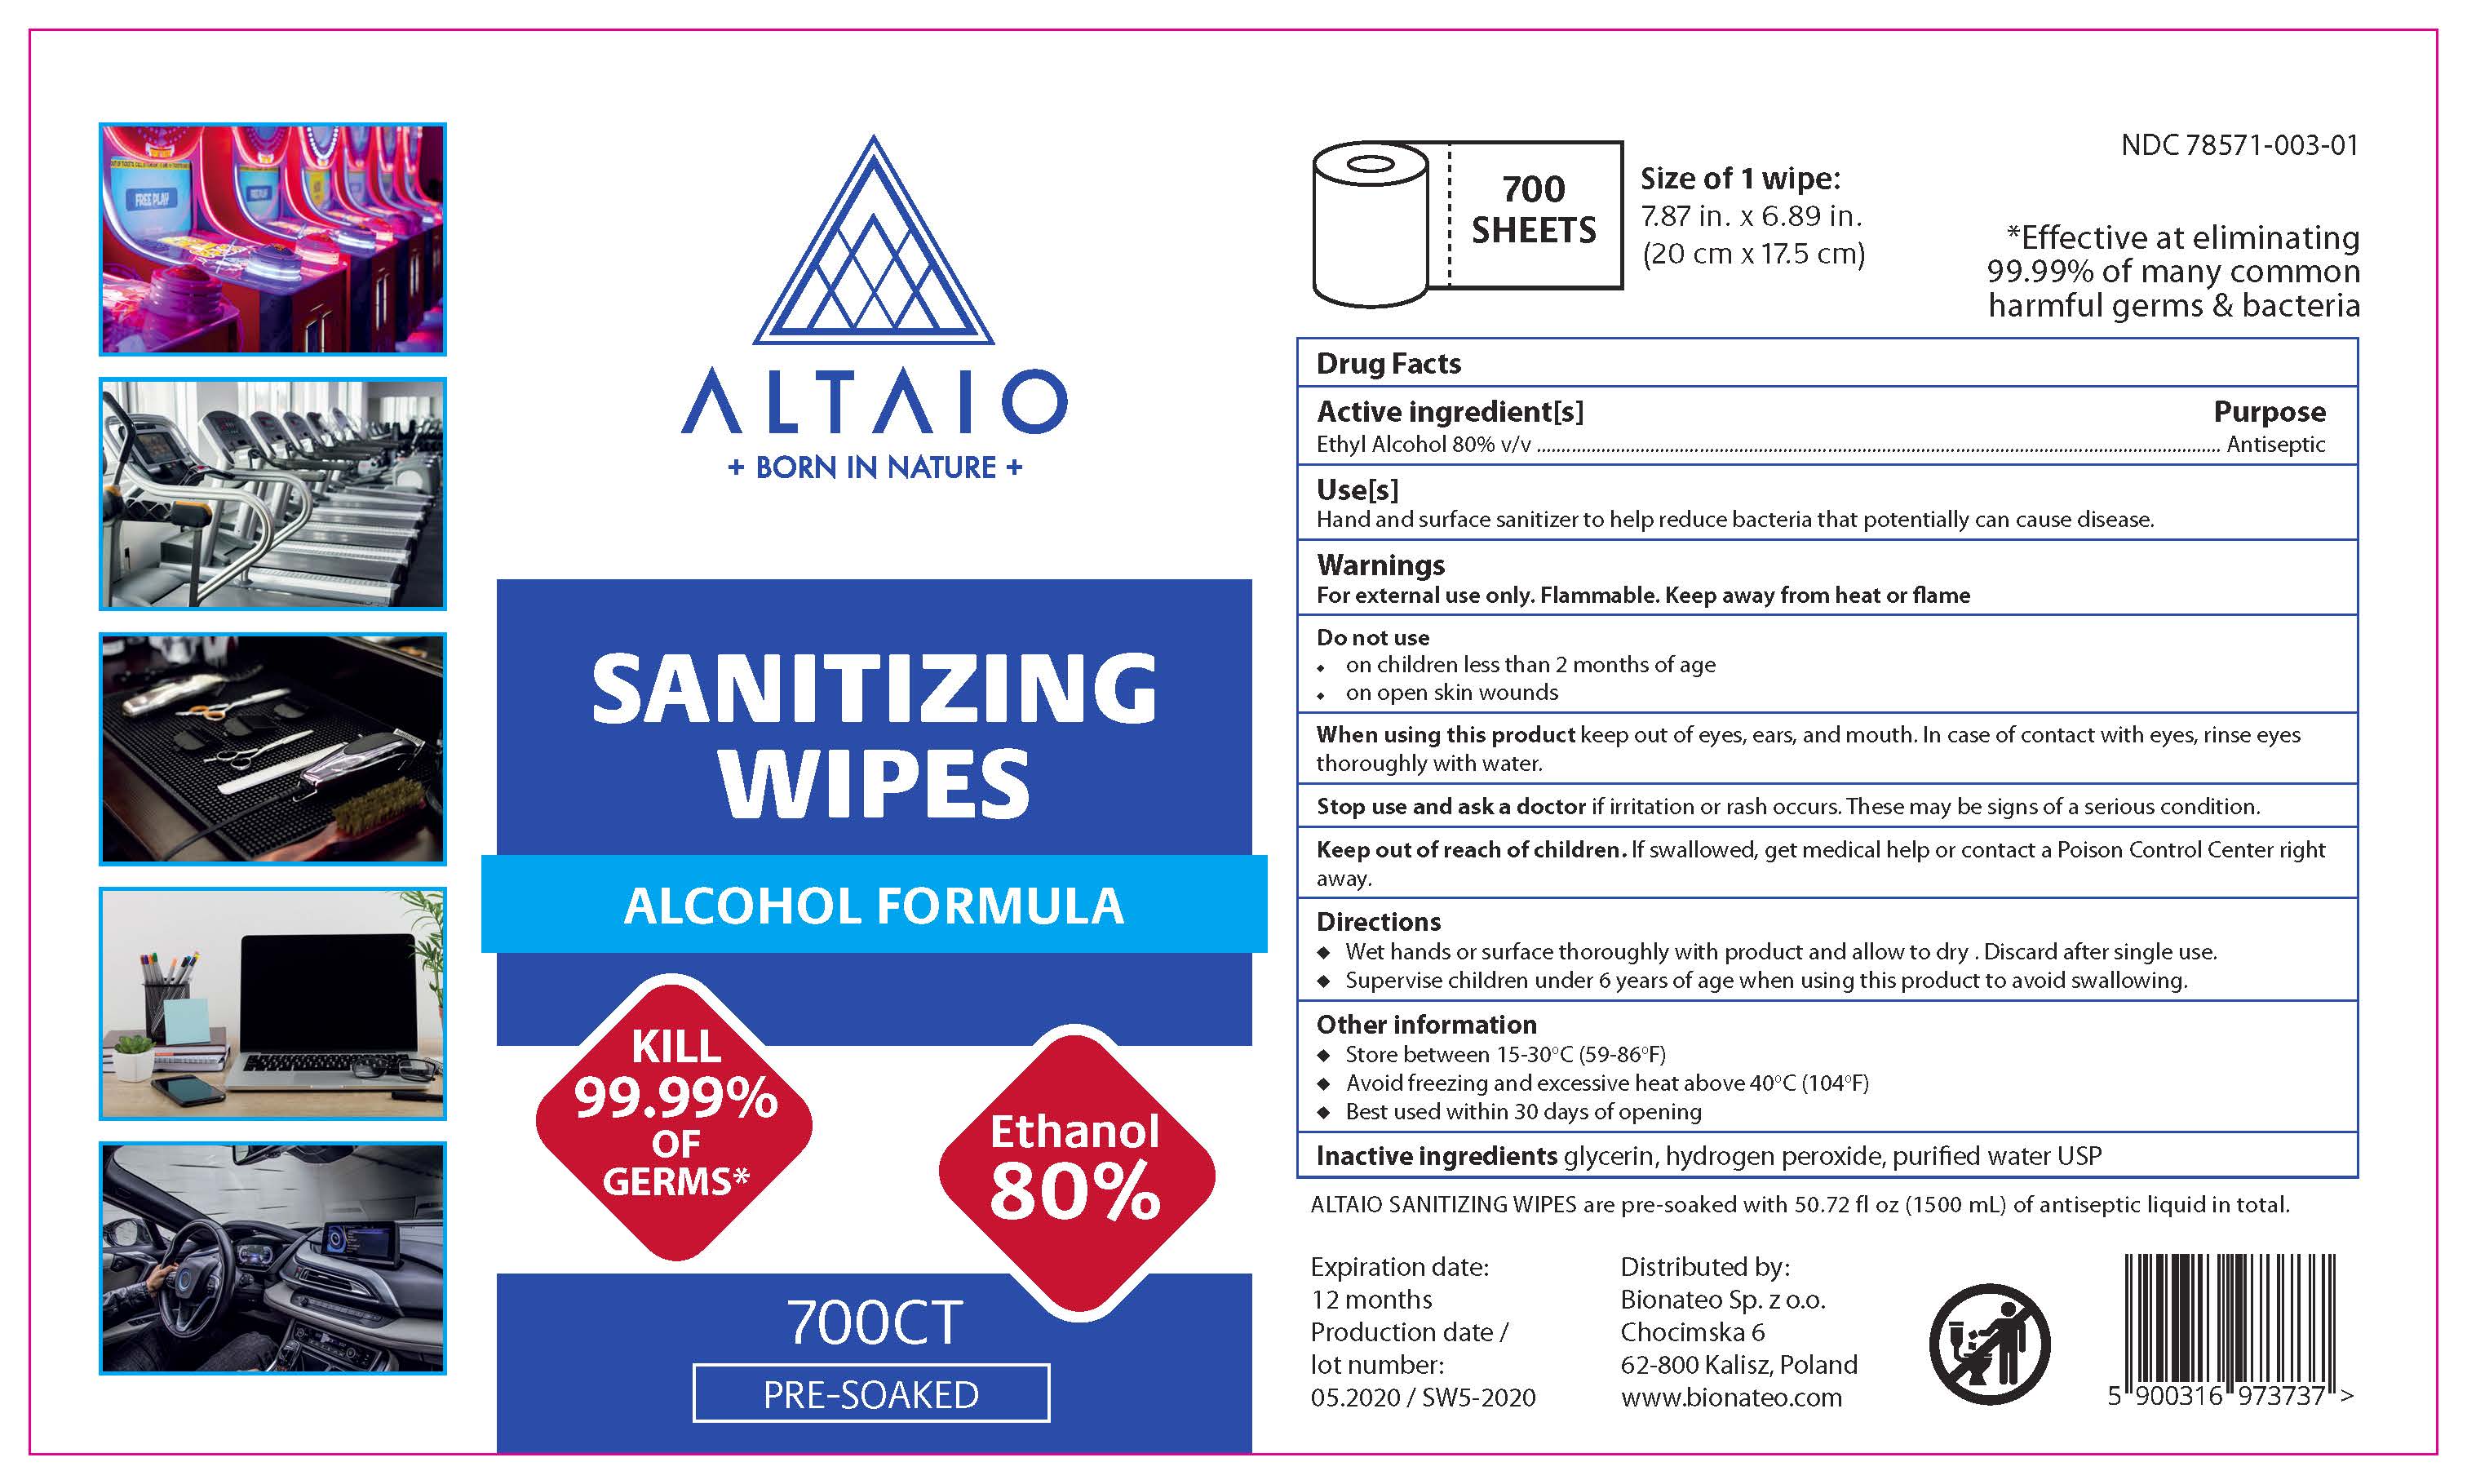 ALTAIO Sanitizing Wipes Label